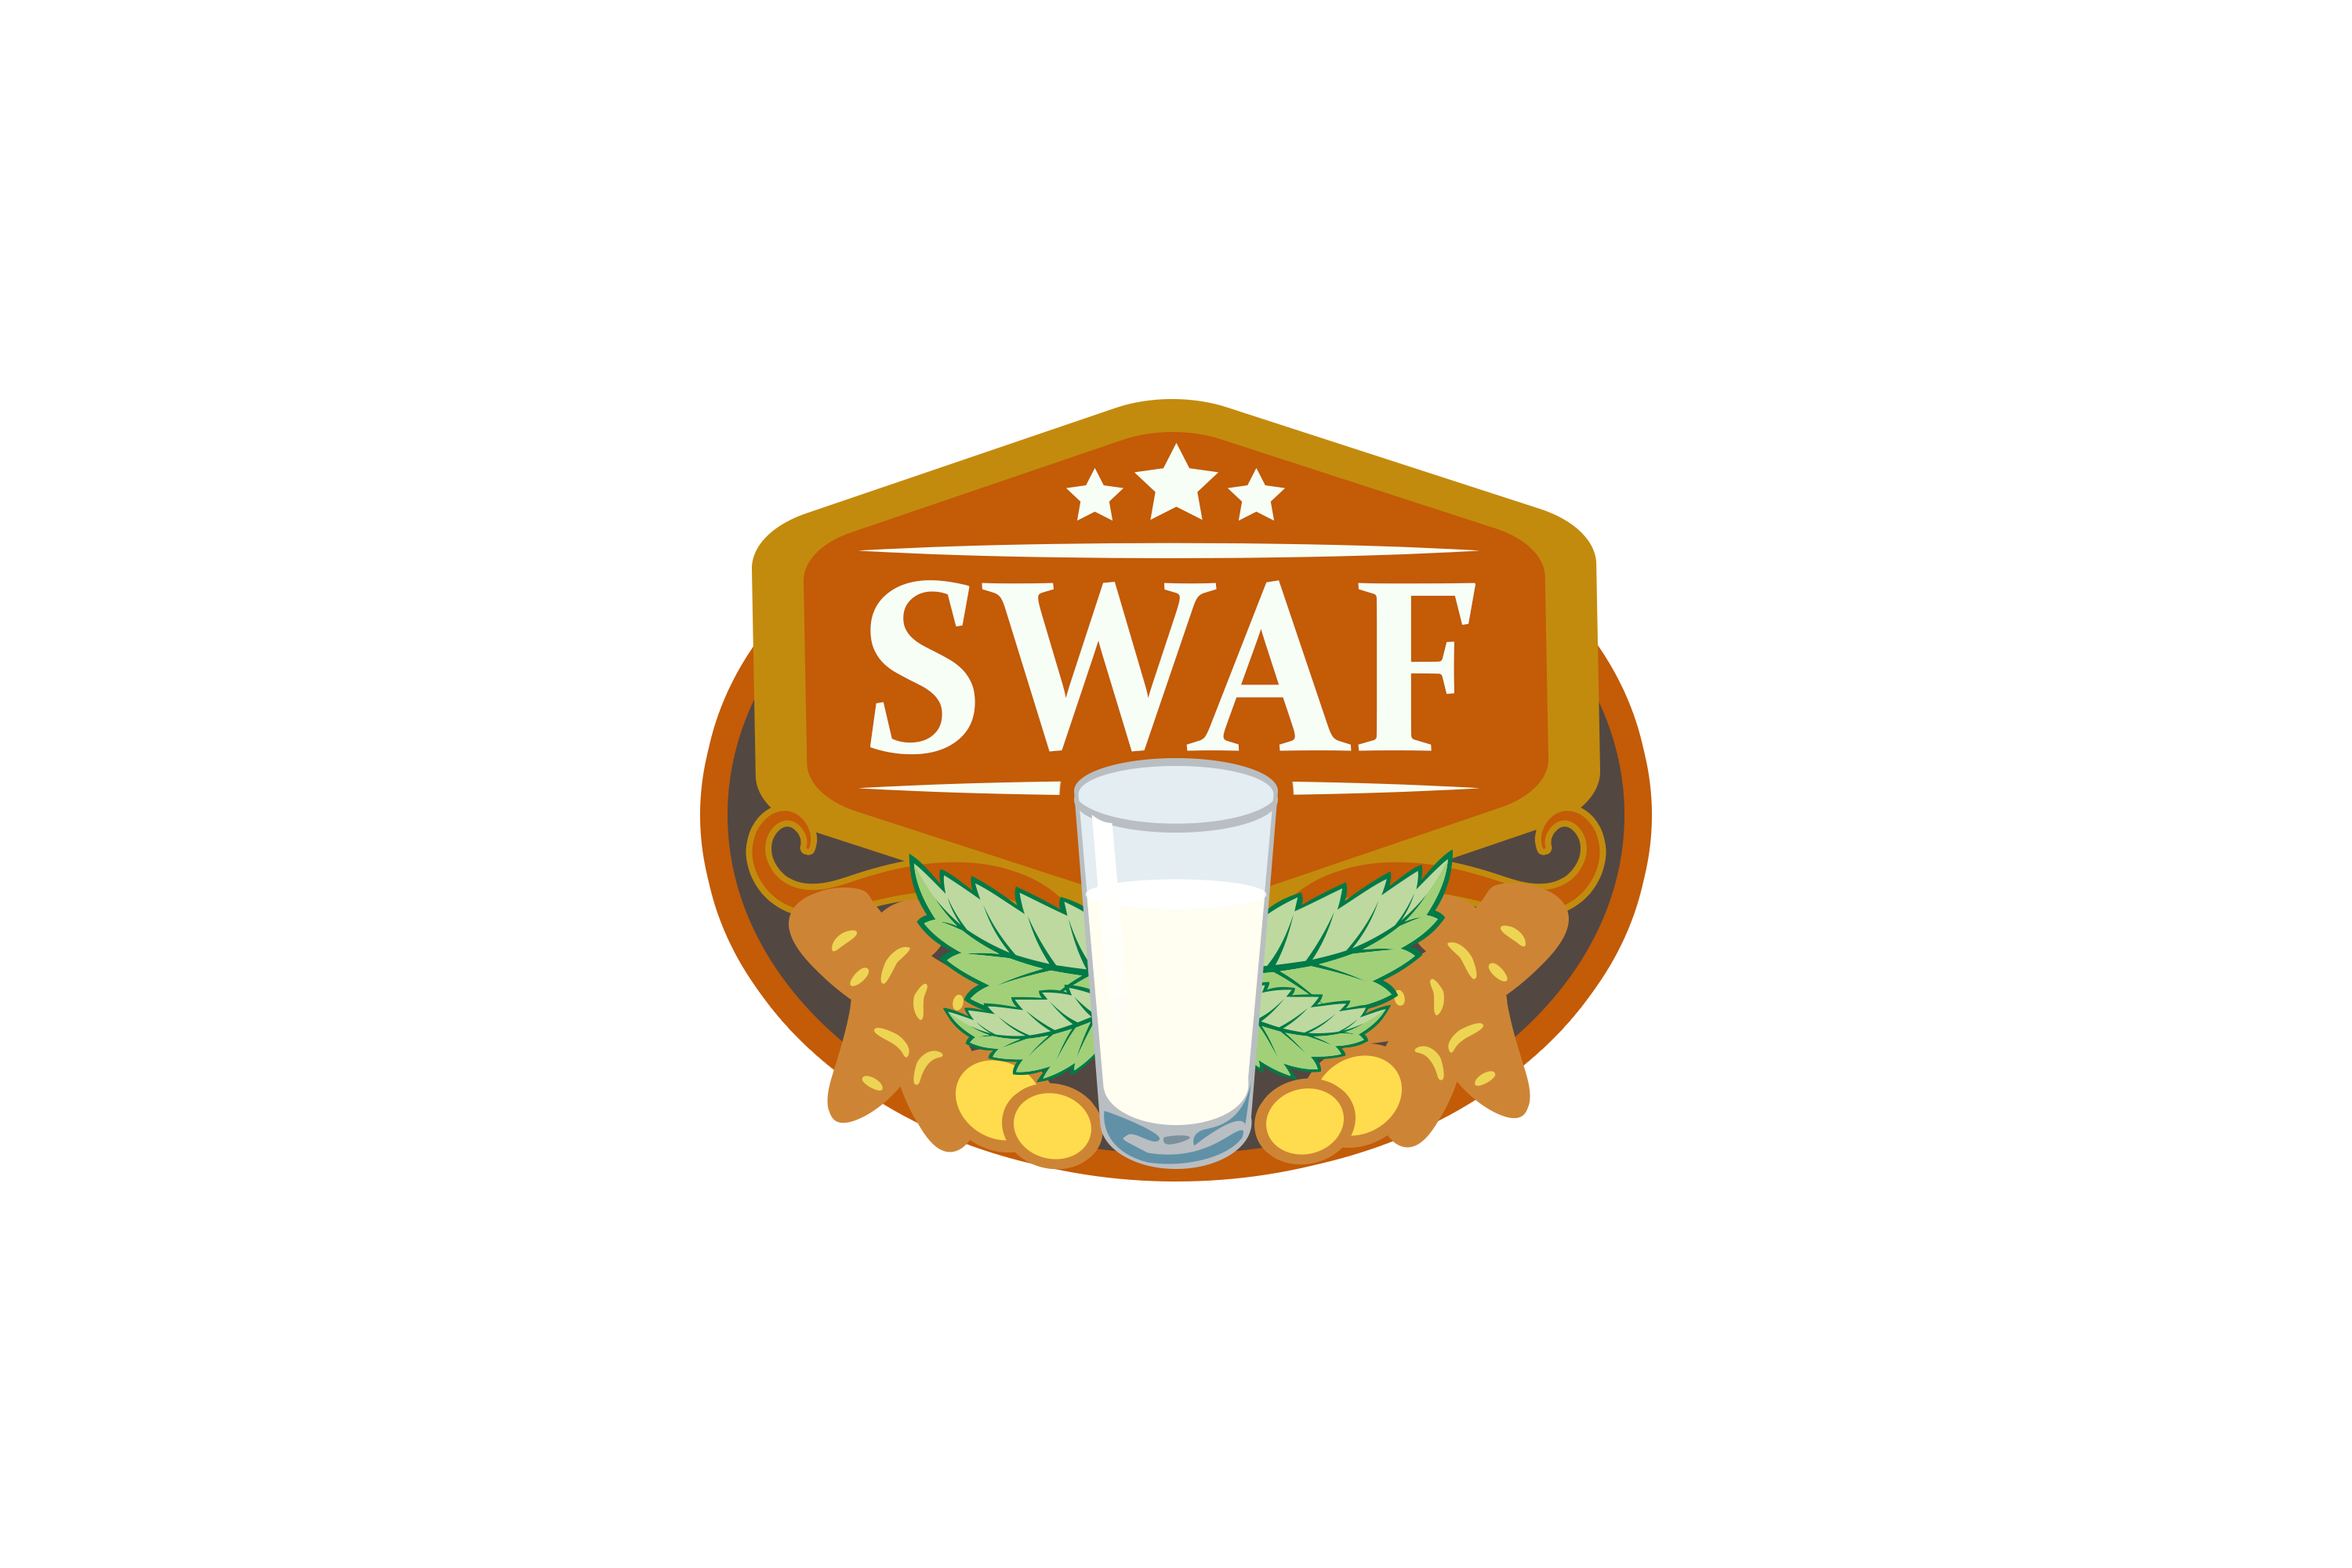 Swaff makes one much healthier.